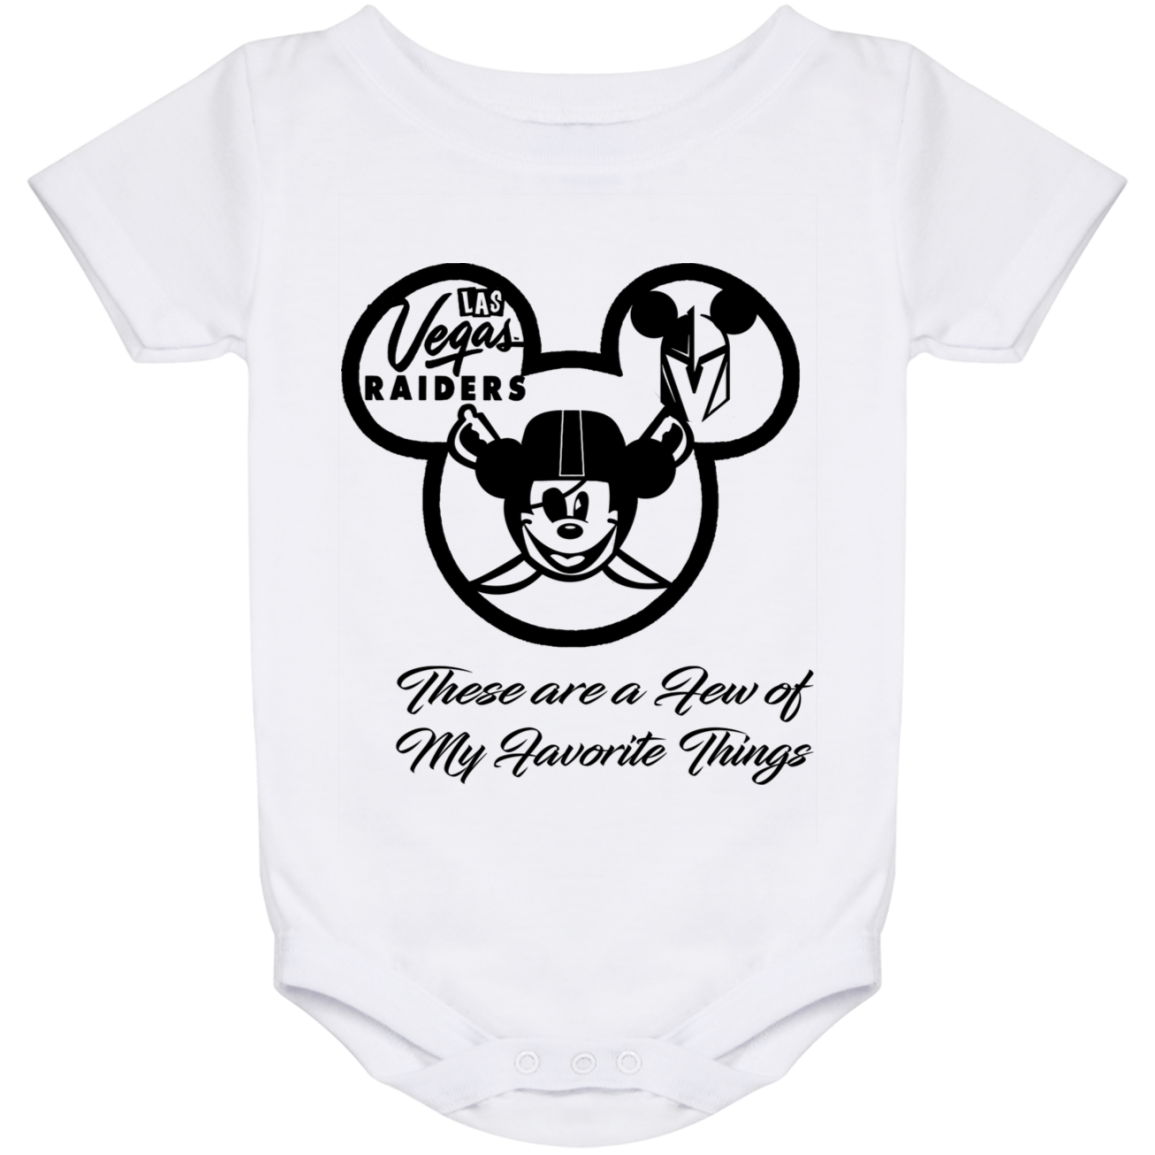 ArtichokeUSA Custom Design. Las Vegas Raiders & Mickey Mouse Mash Up. Fan Art. Parody. Baby Onesie 24 Month